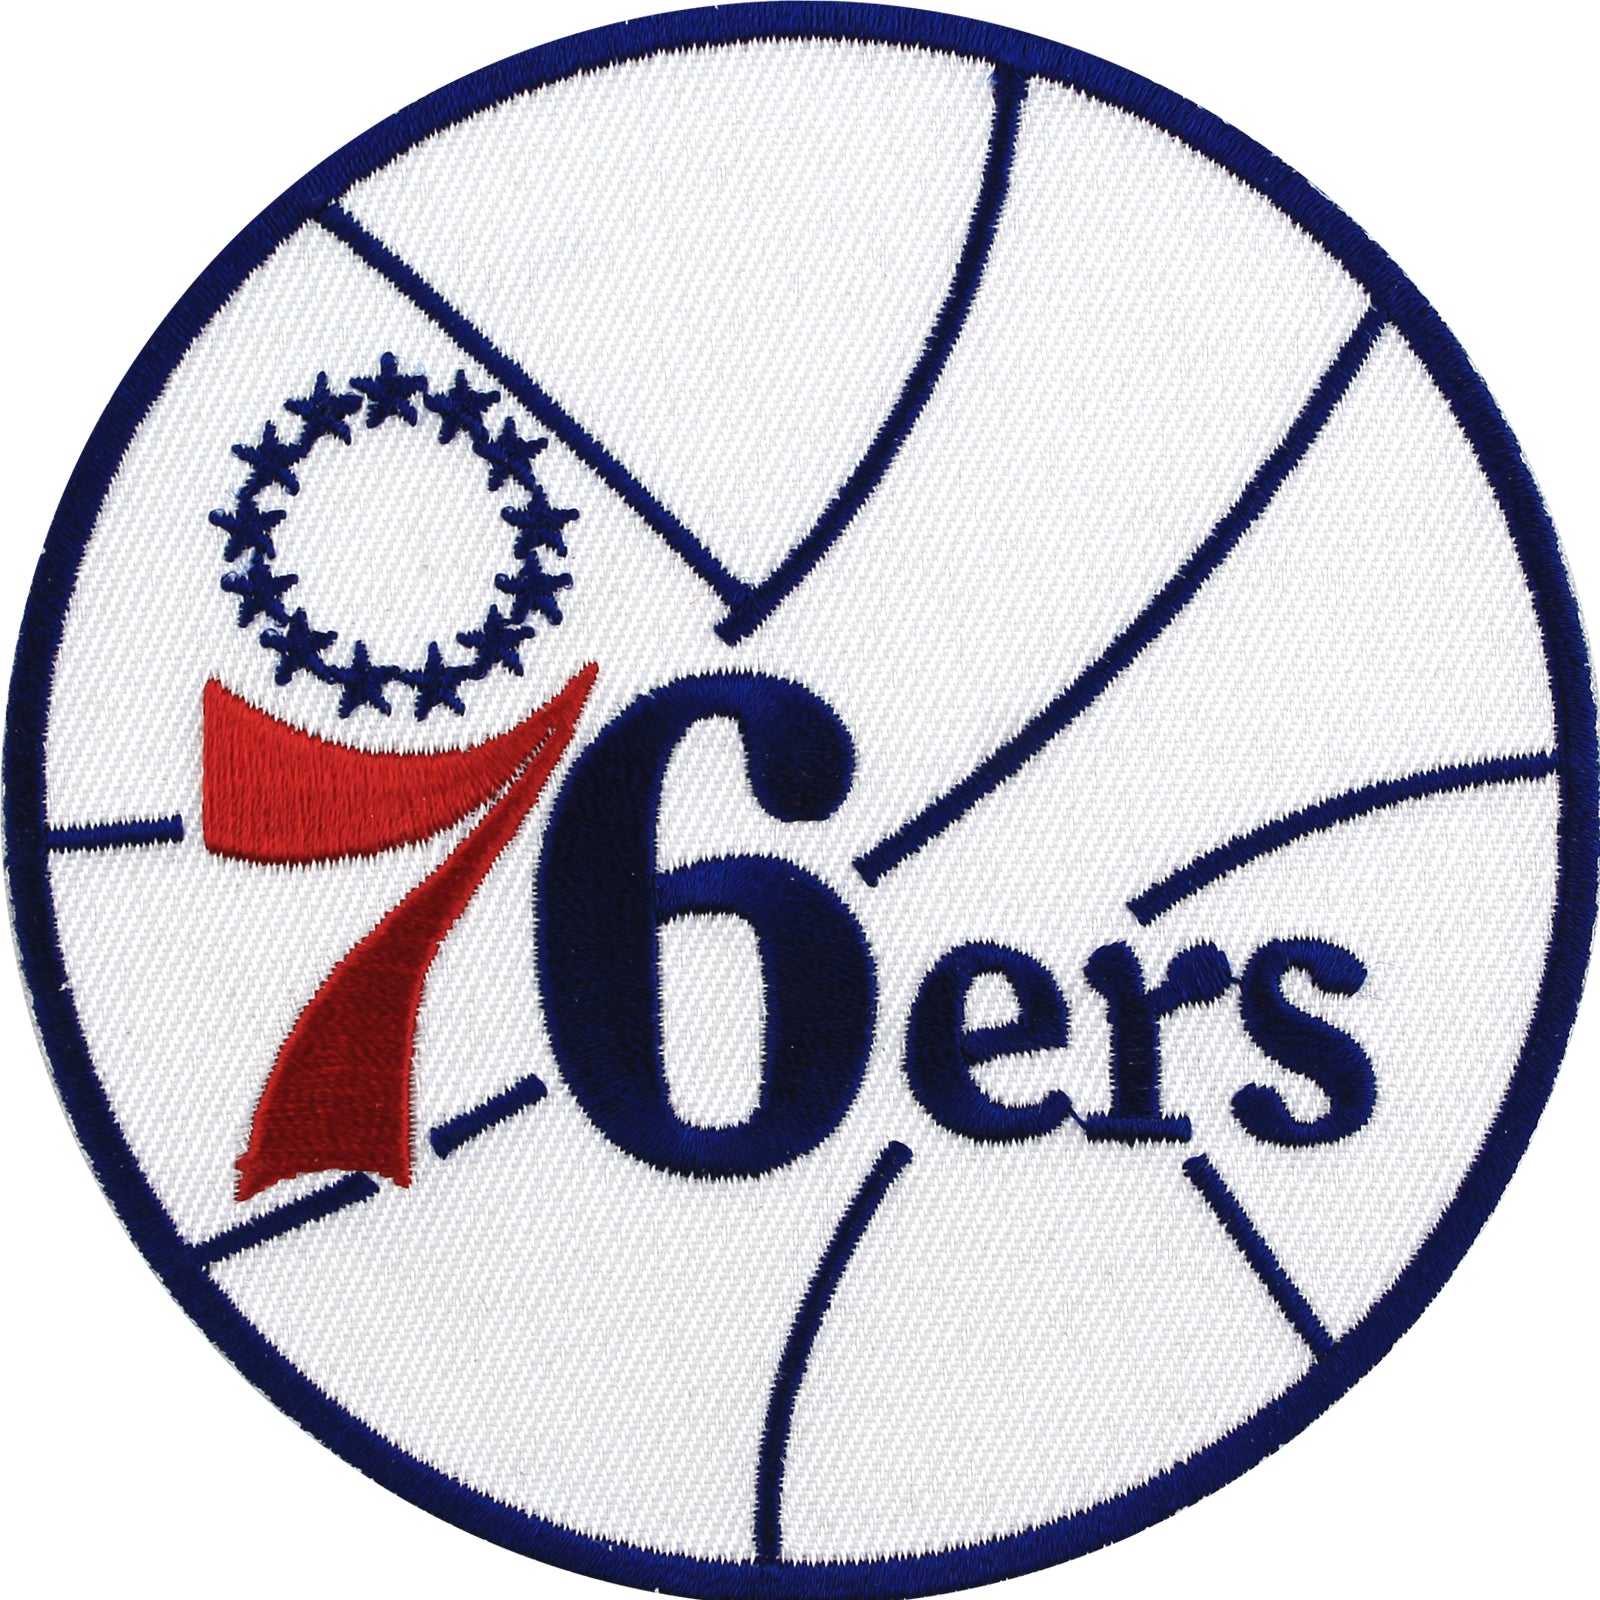 Philadelphia 76ers Primary Team Logo Patch 